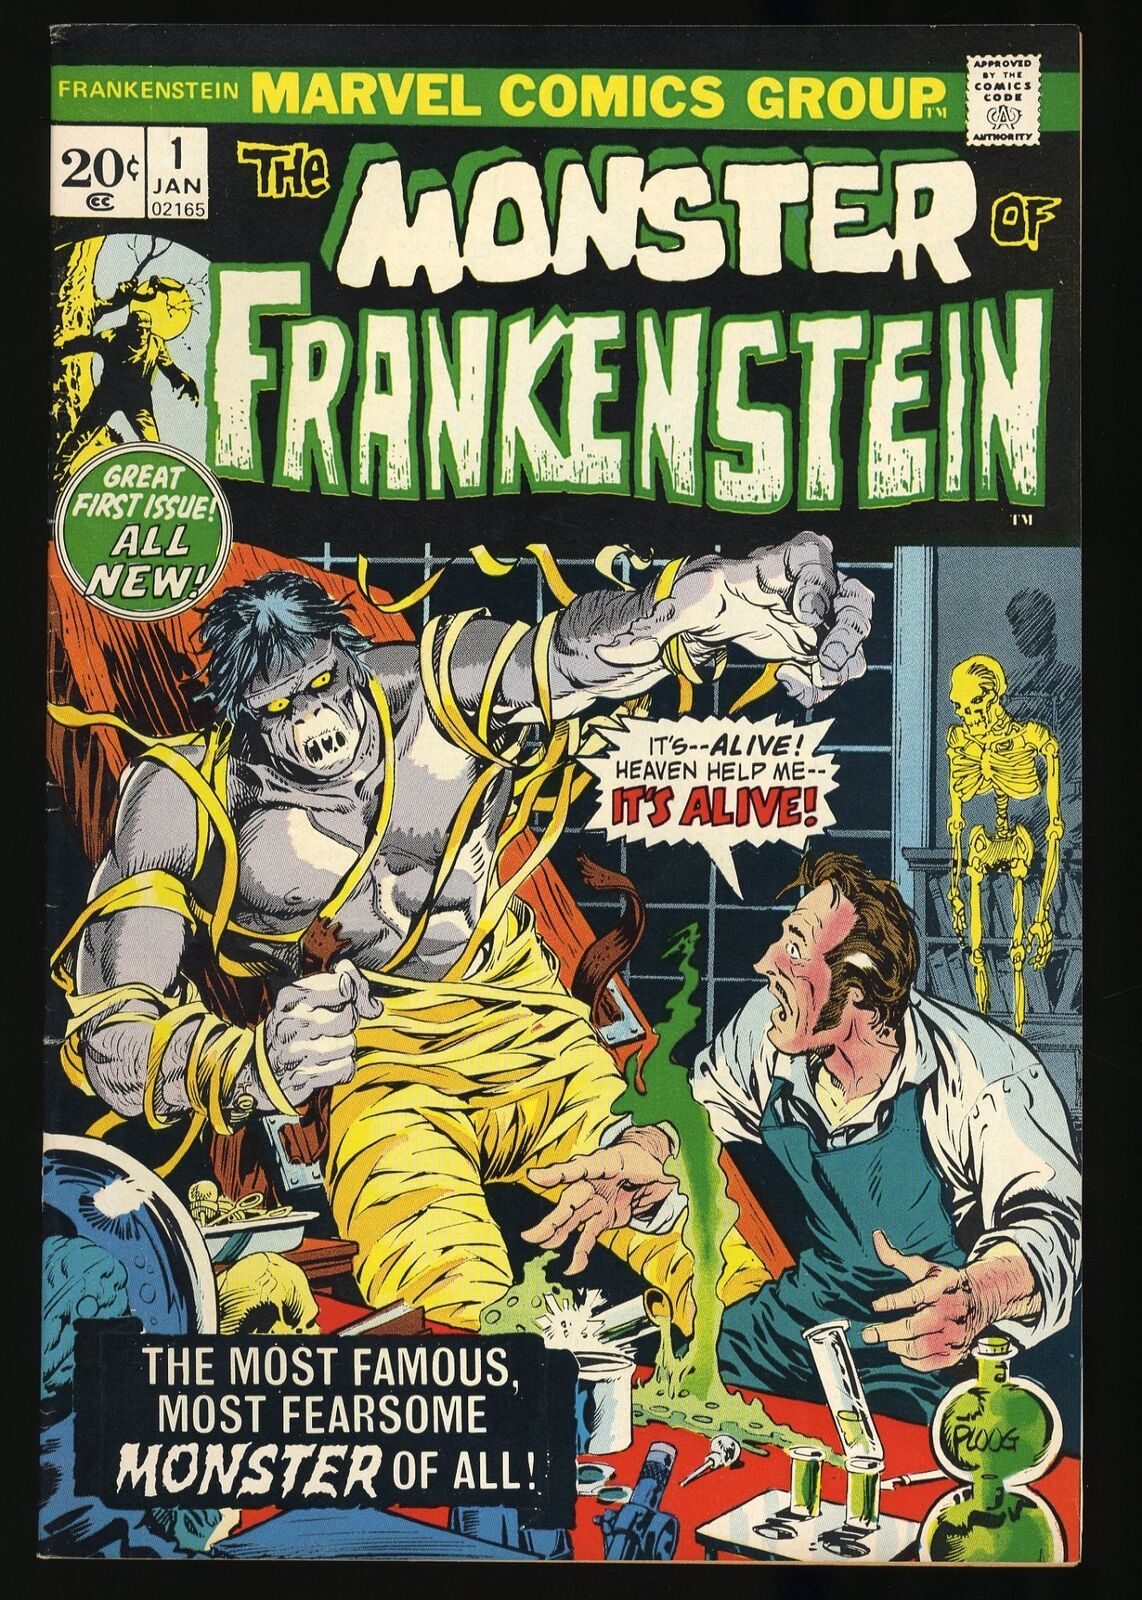 Frankenstein (1973) #1 VF- 7.5 Mike Ploog Cover and Beautiful Artwork